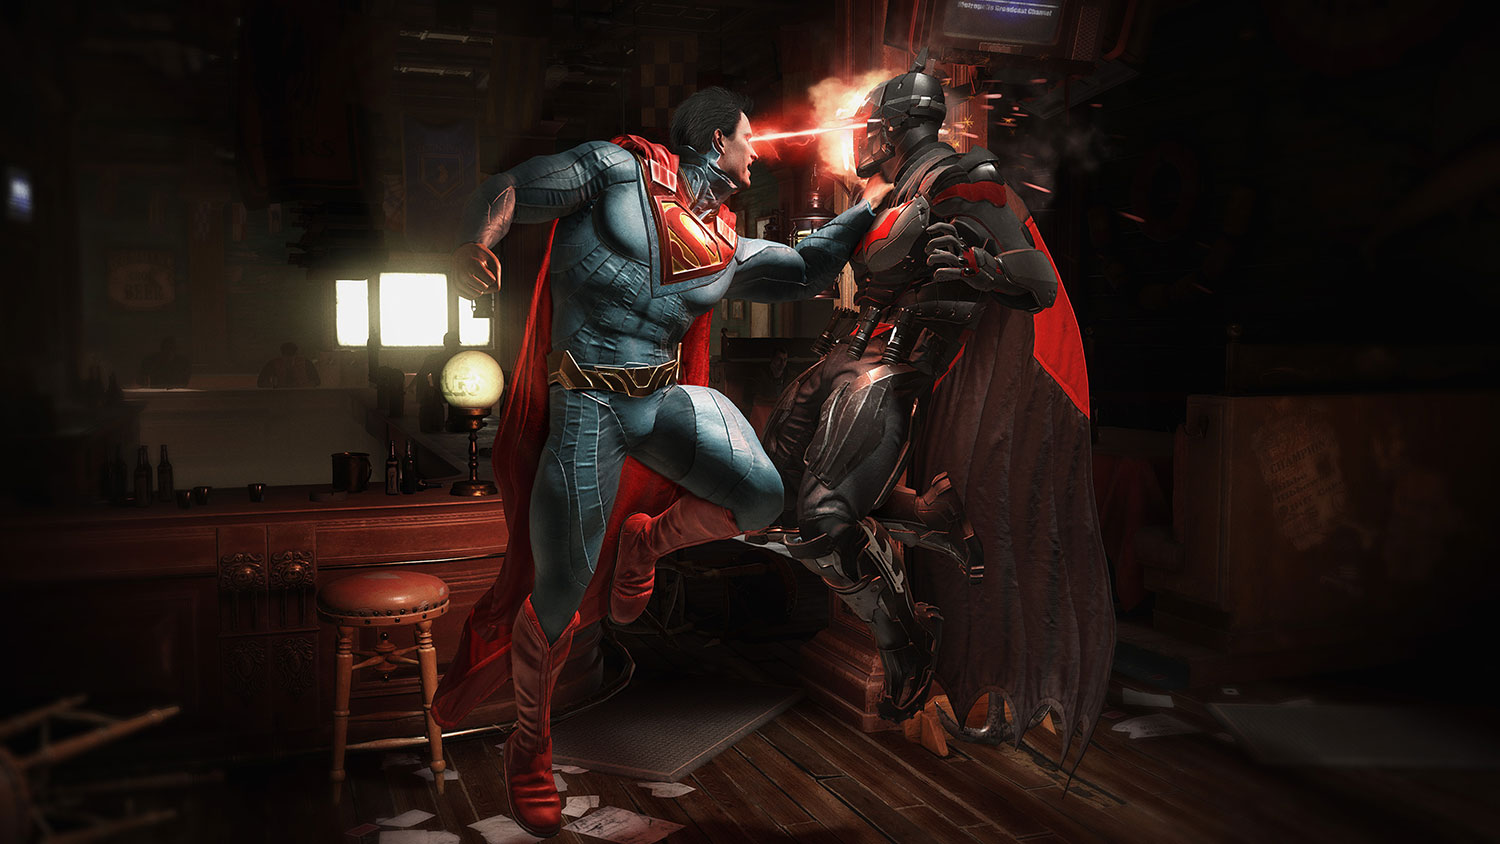 injustice 2 hands on batman superman01 1465839354